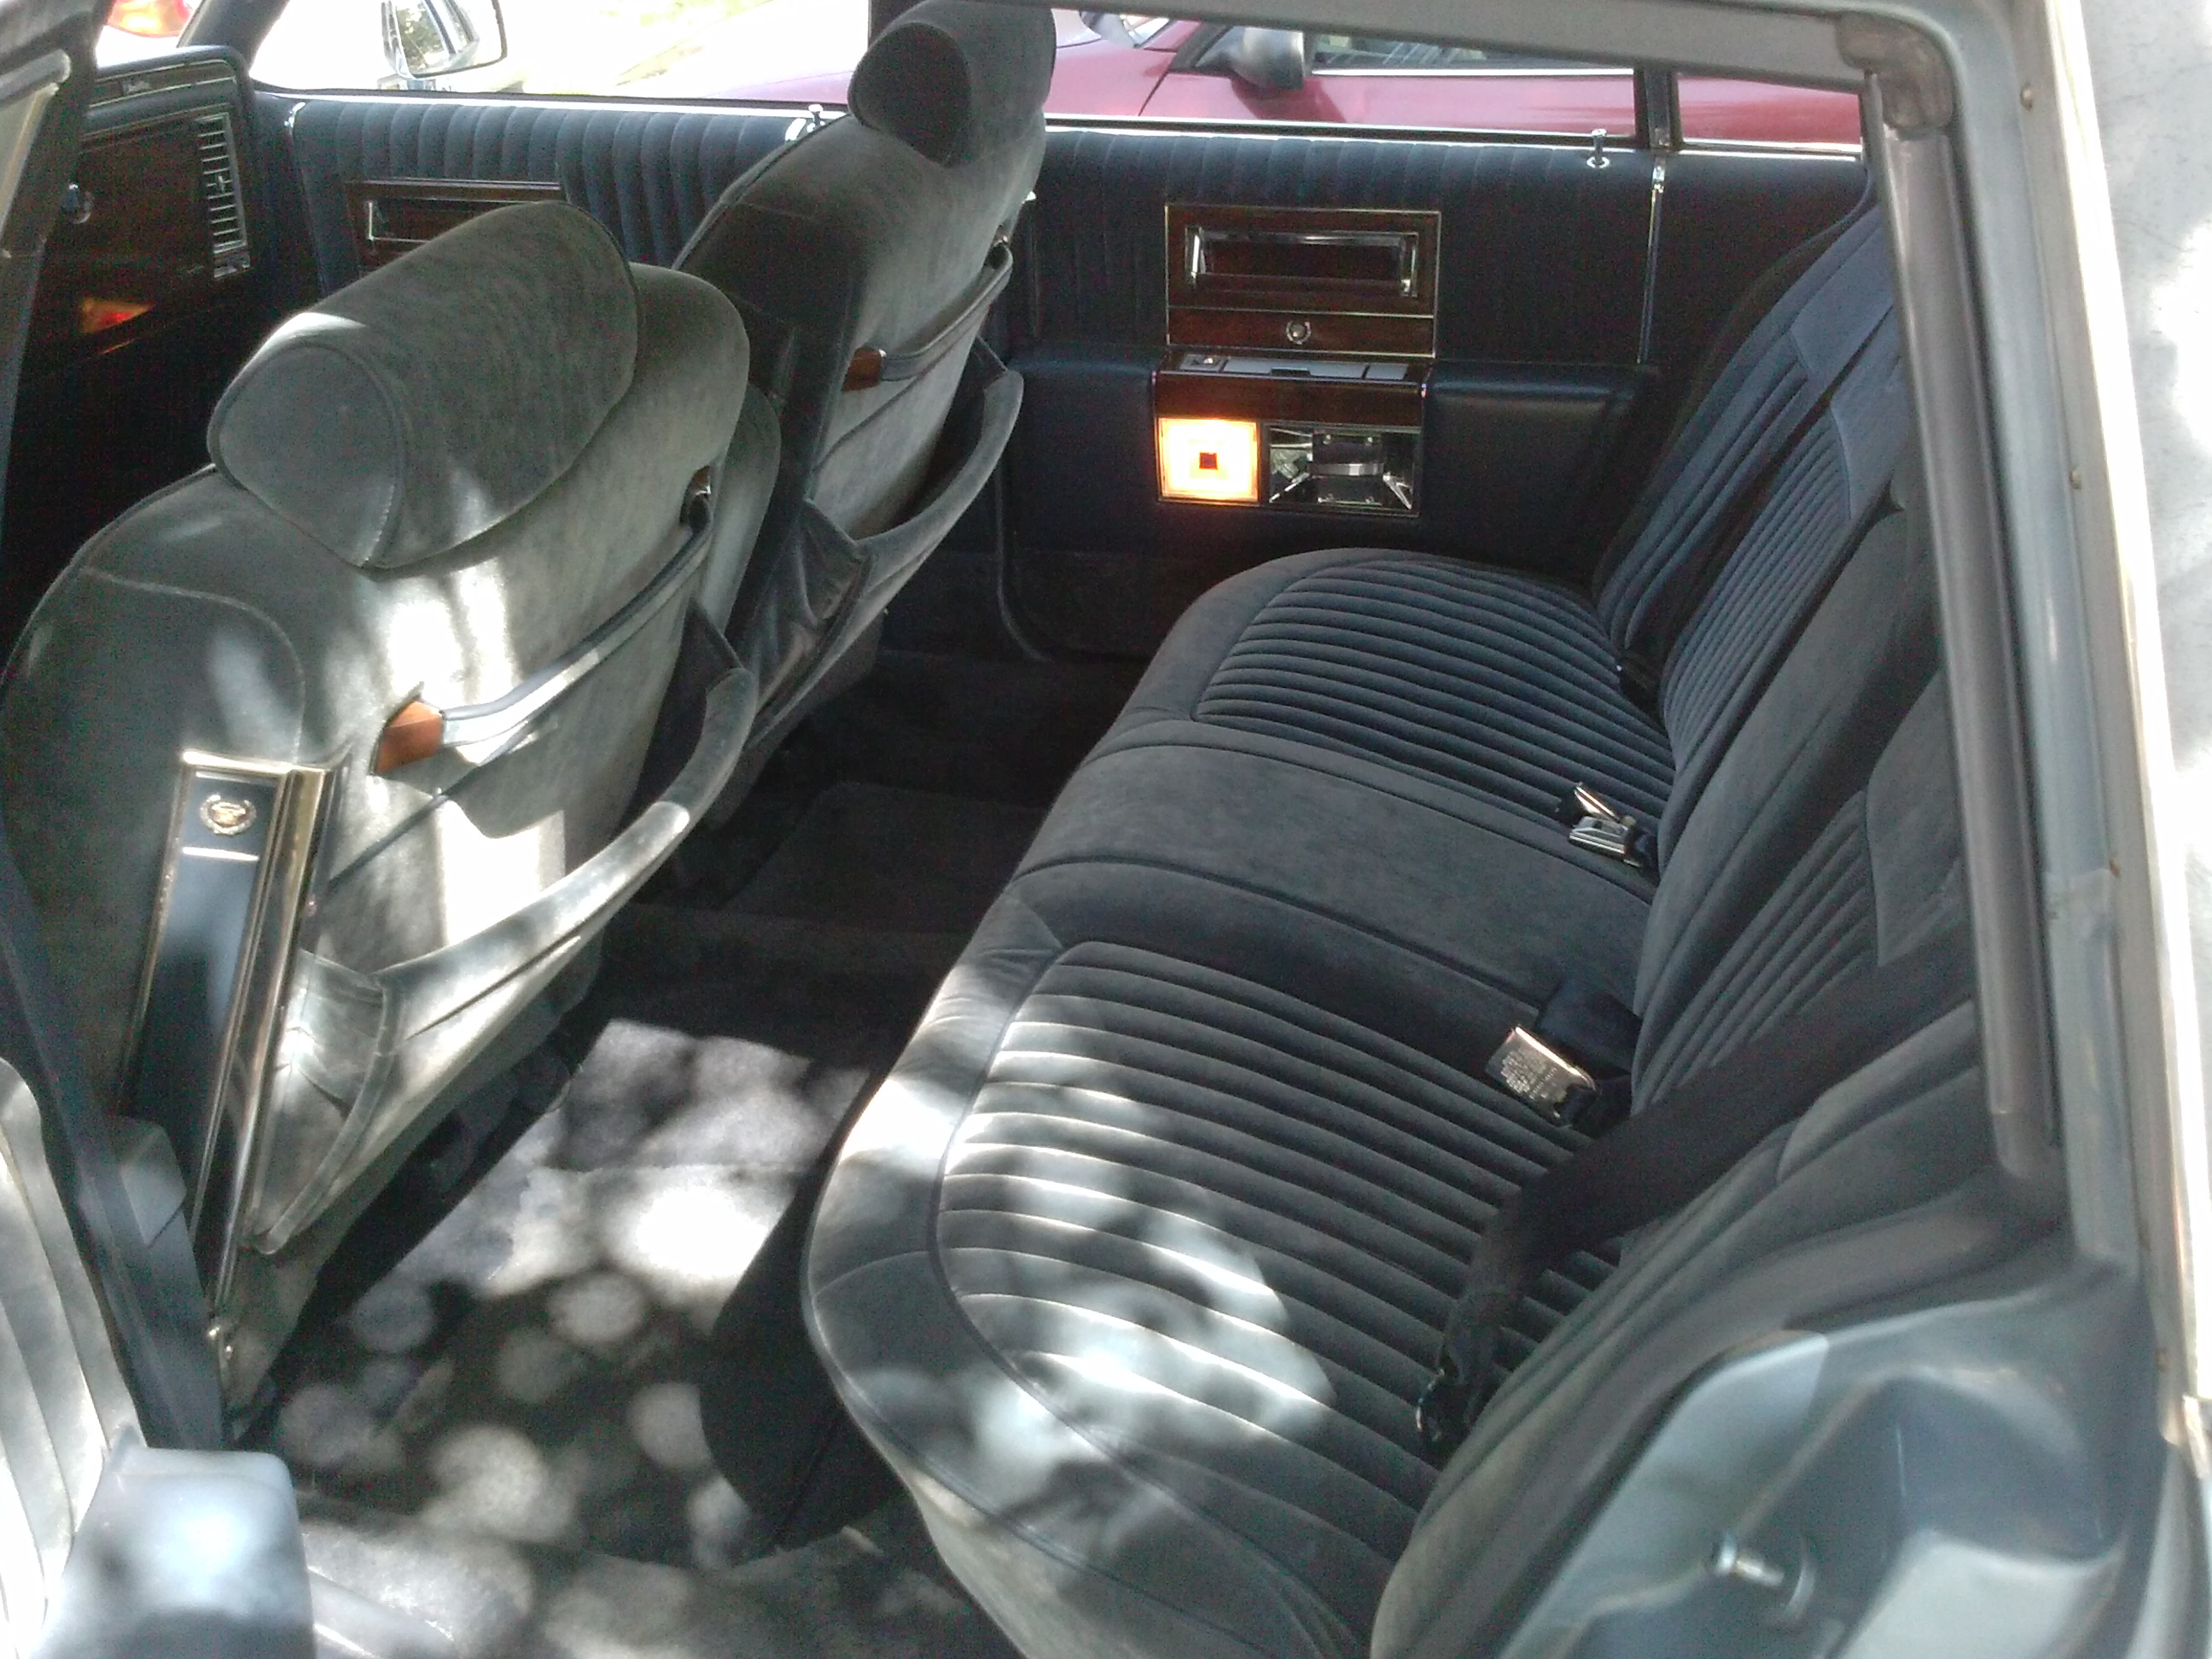 89 caddy backseat